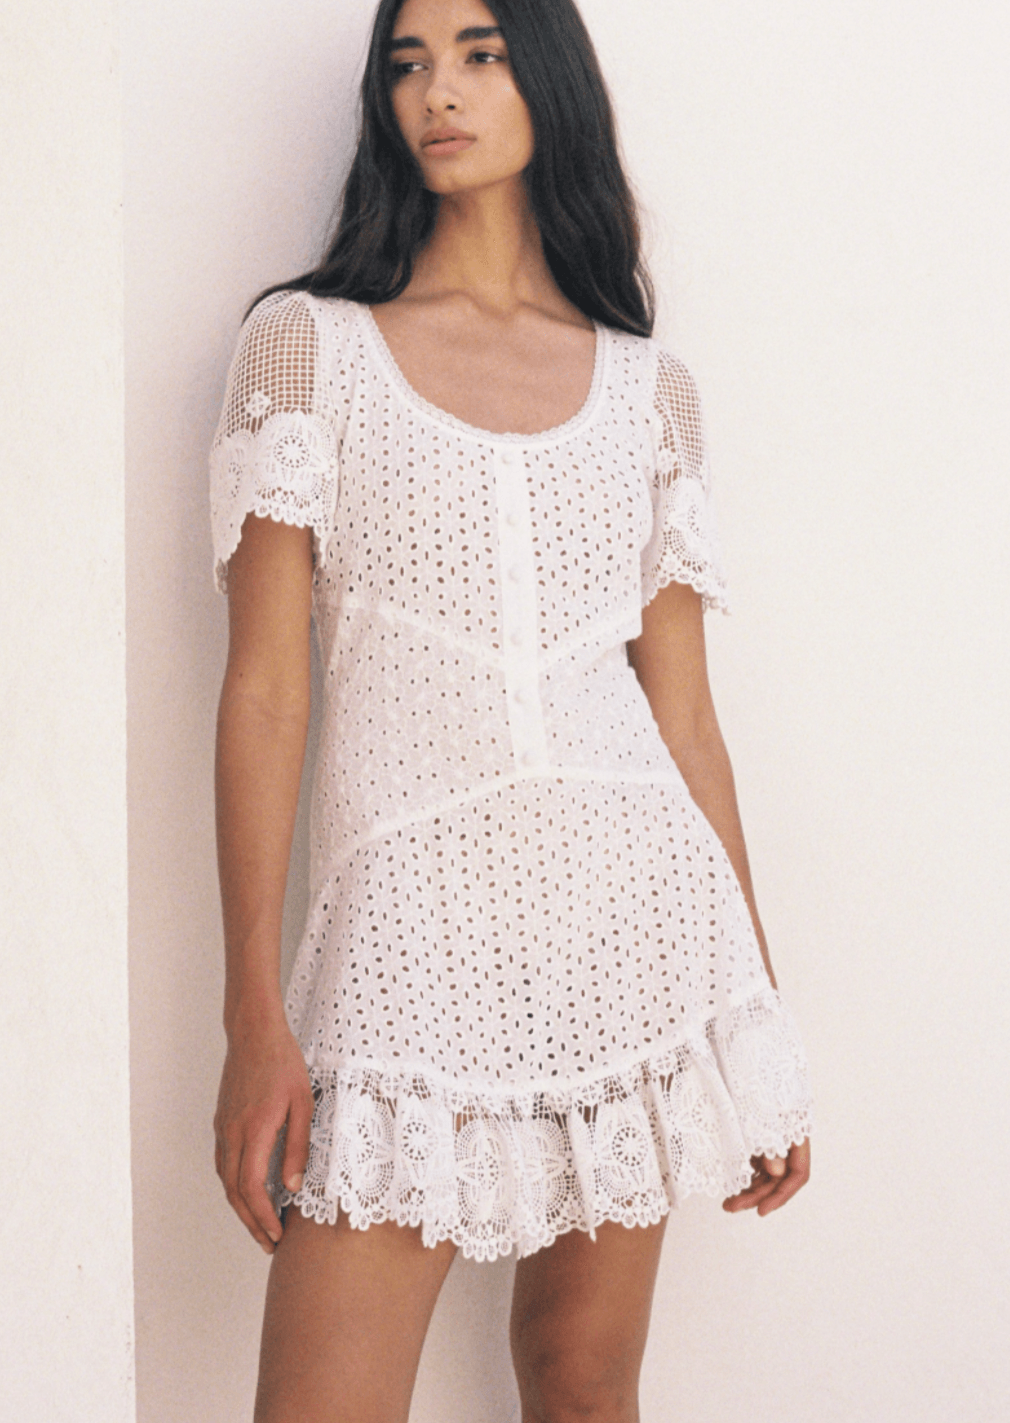 Maia Bergman - Broderie Anglais Mini Dress Ori - OutDazl